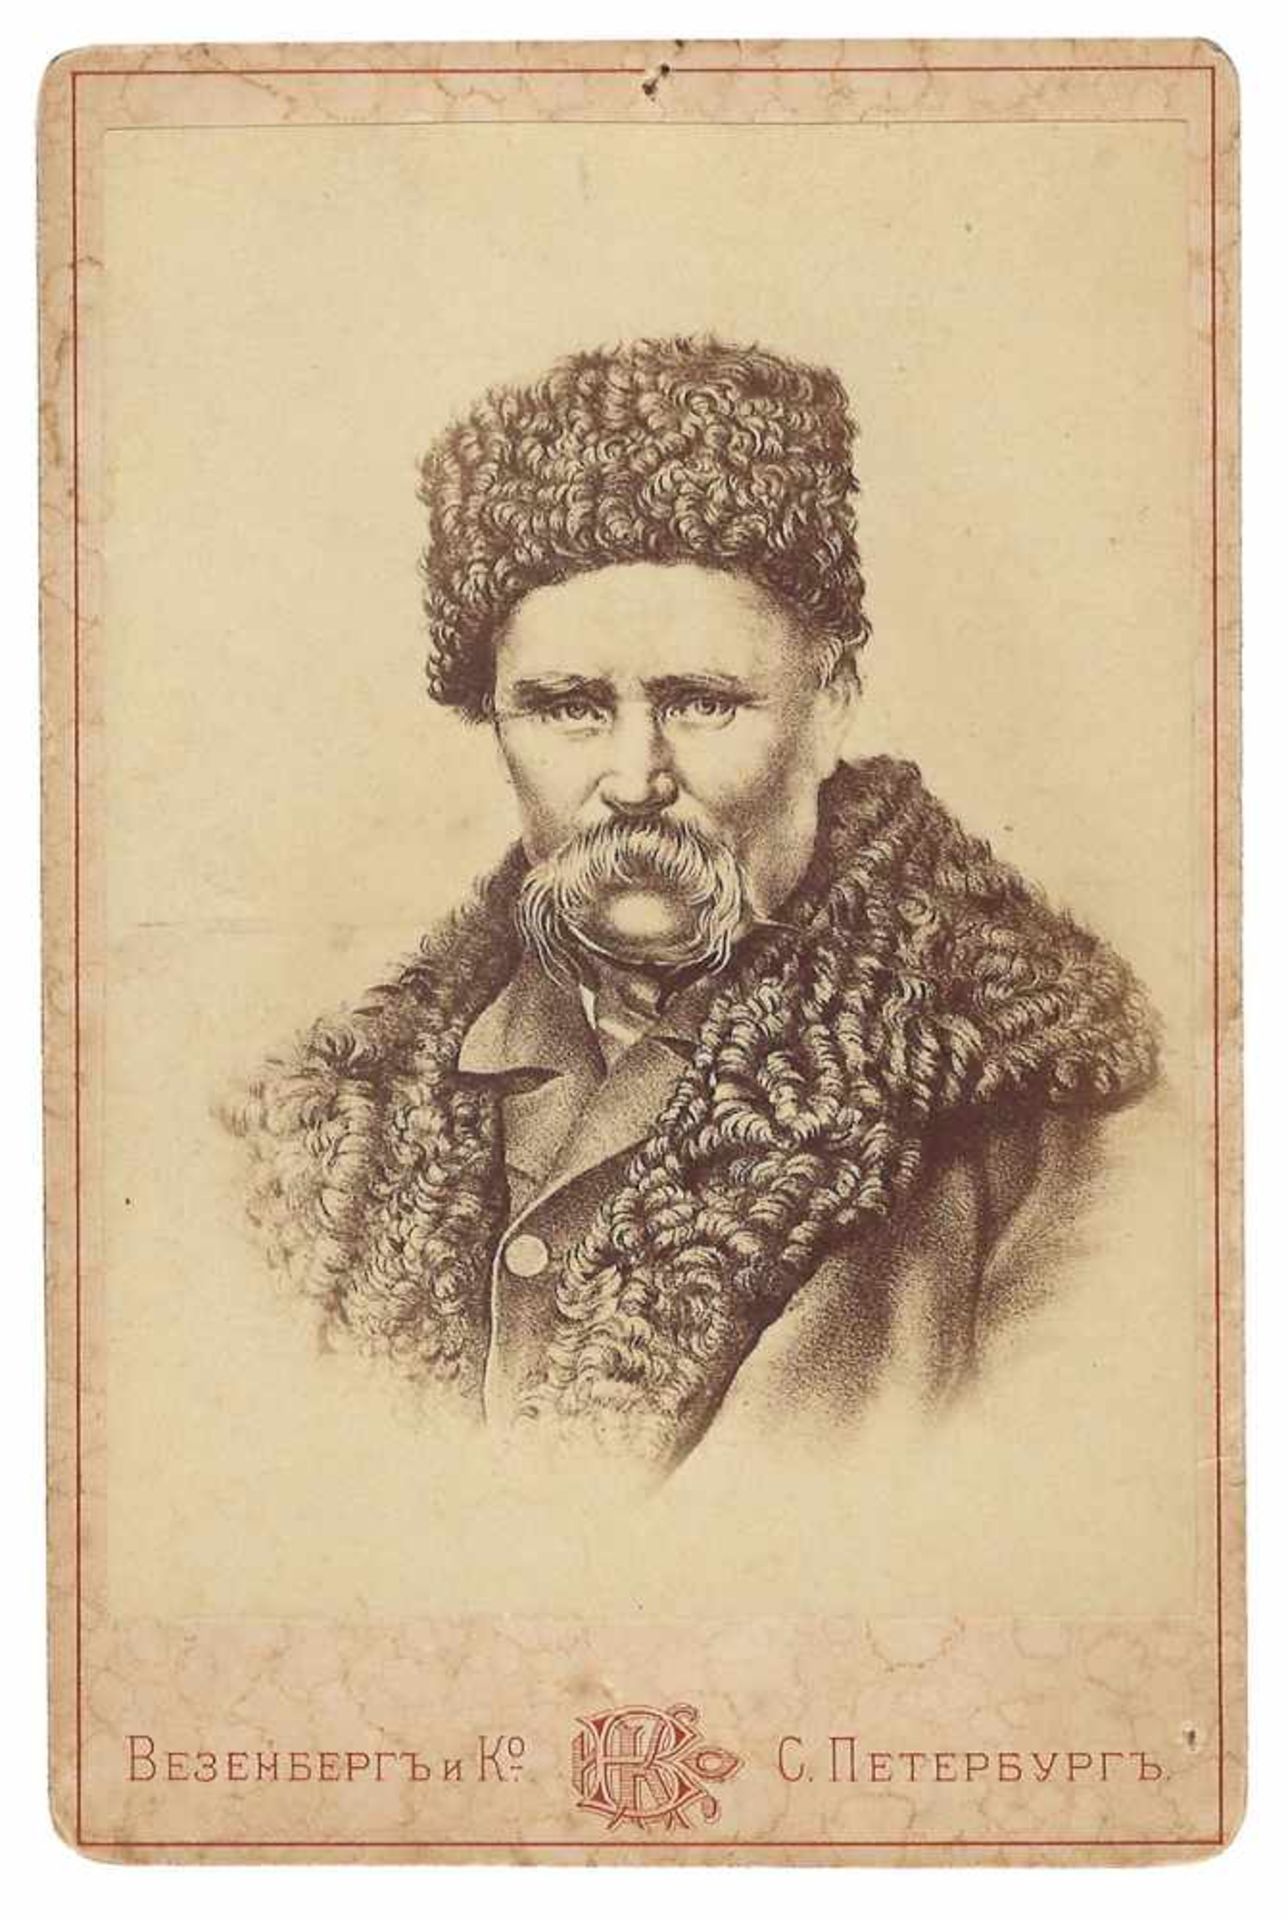 [Russian Empire]. Wesenberg, I. Cabinet photograph of Taras Shevchenko. 1870s.